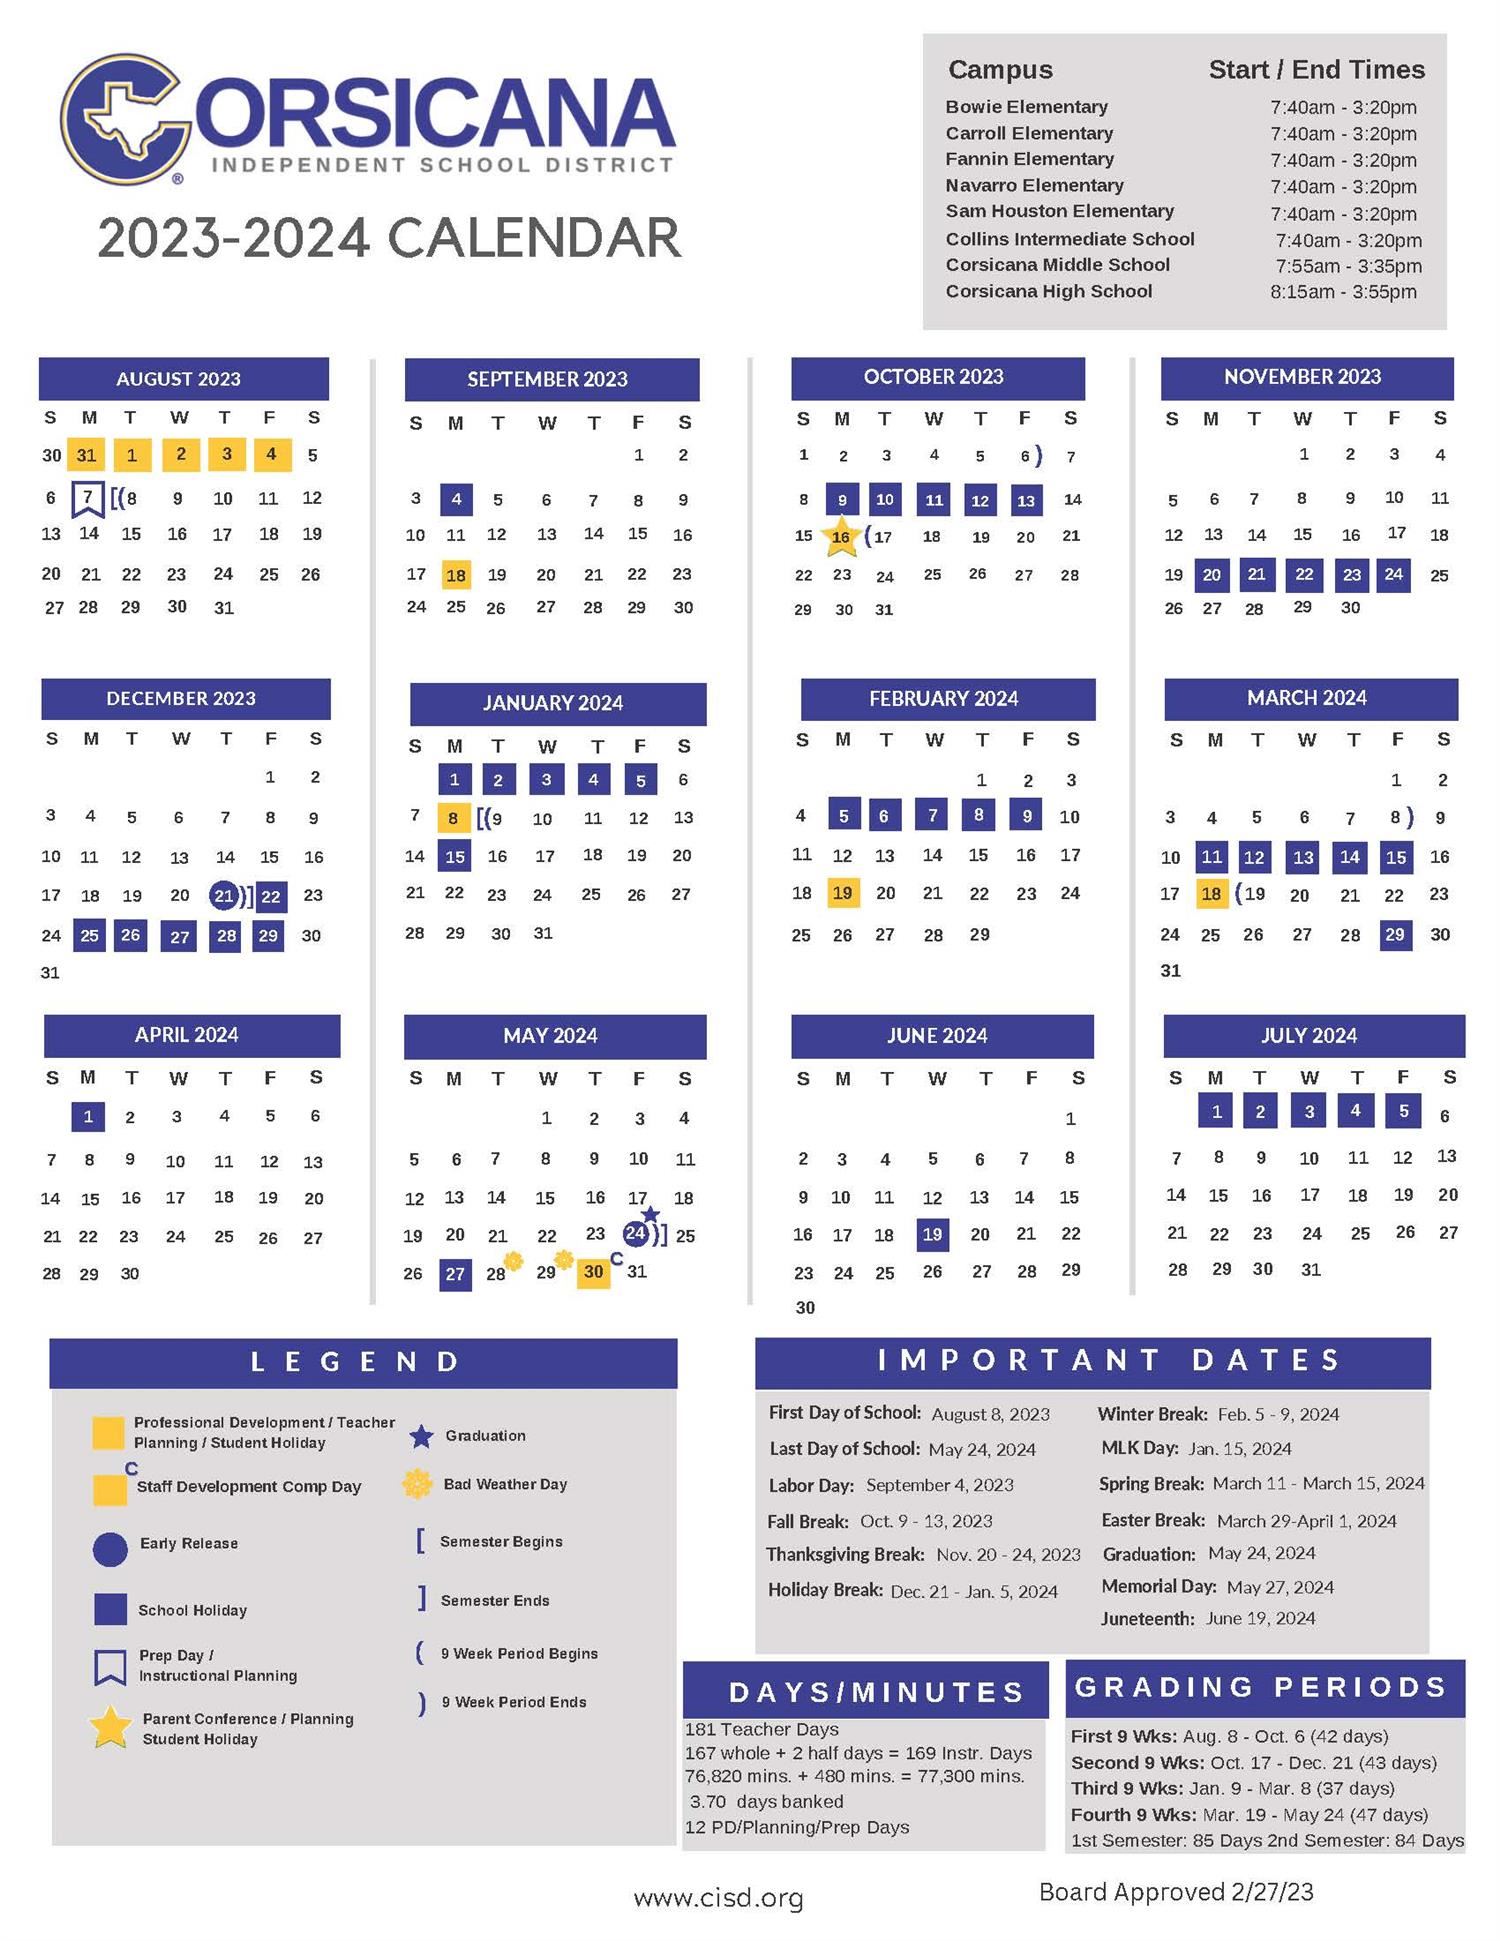 CISD Academic Calendar 2023-2024